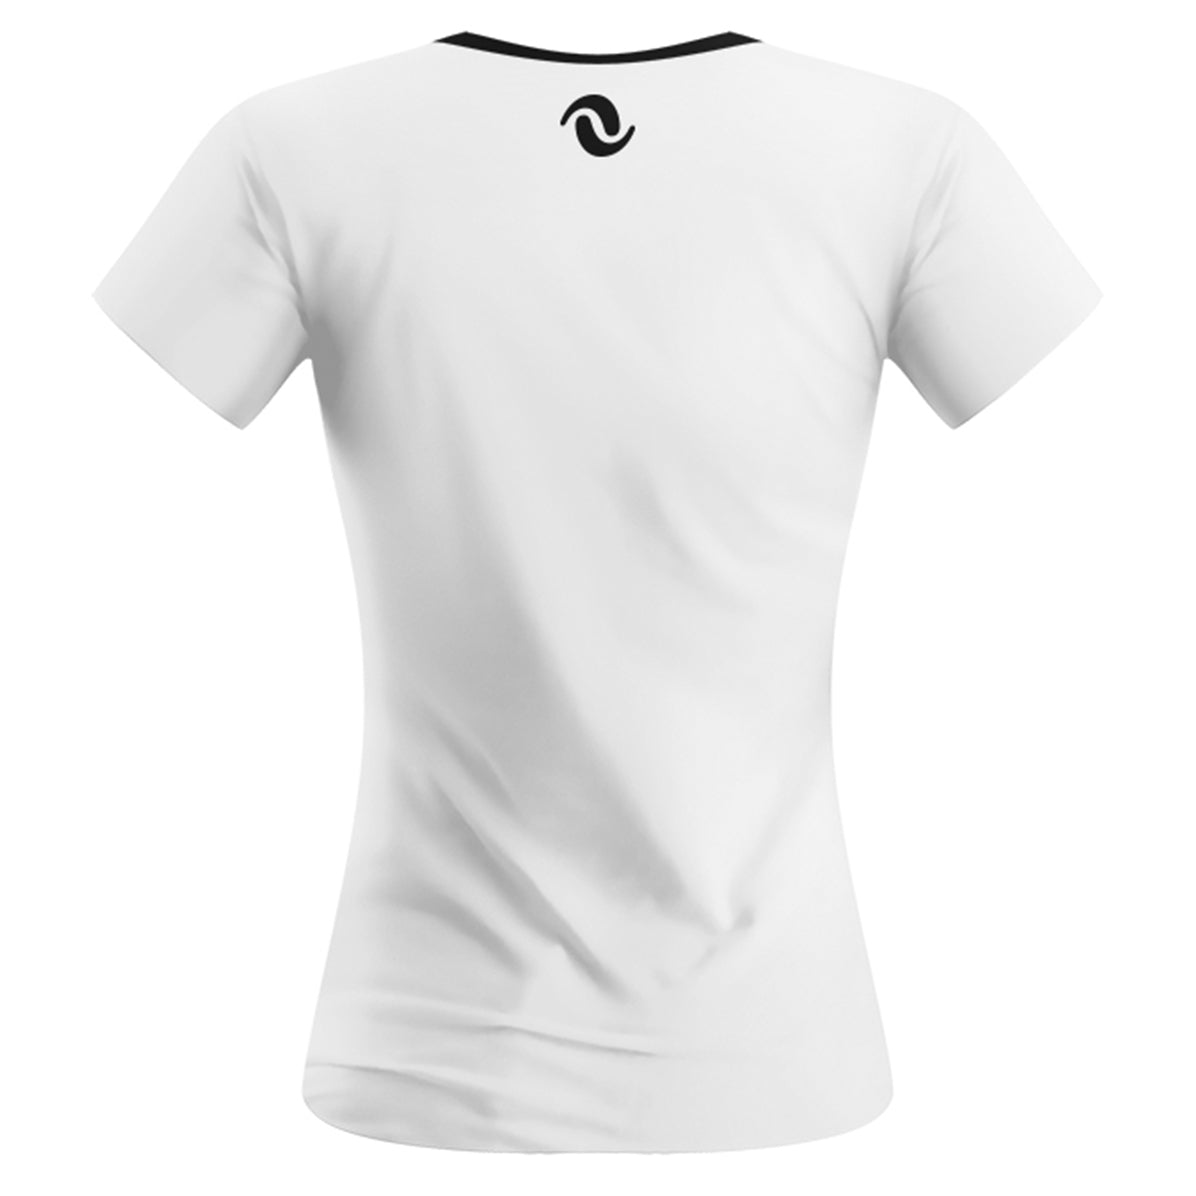 NV Aguascalientes - Performance Shirt